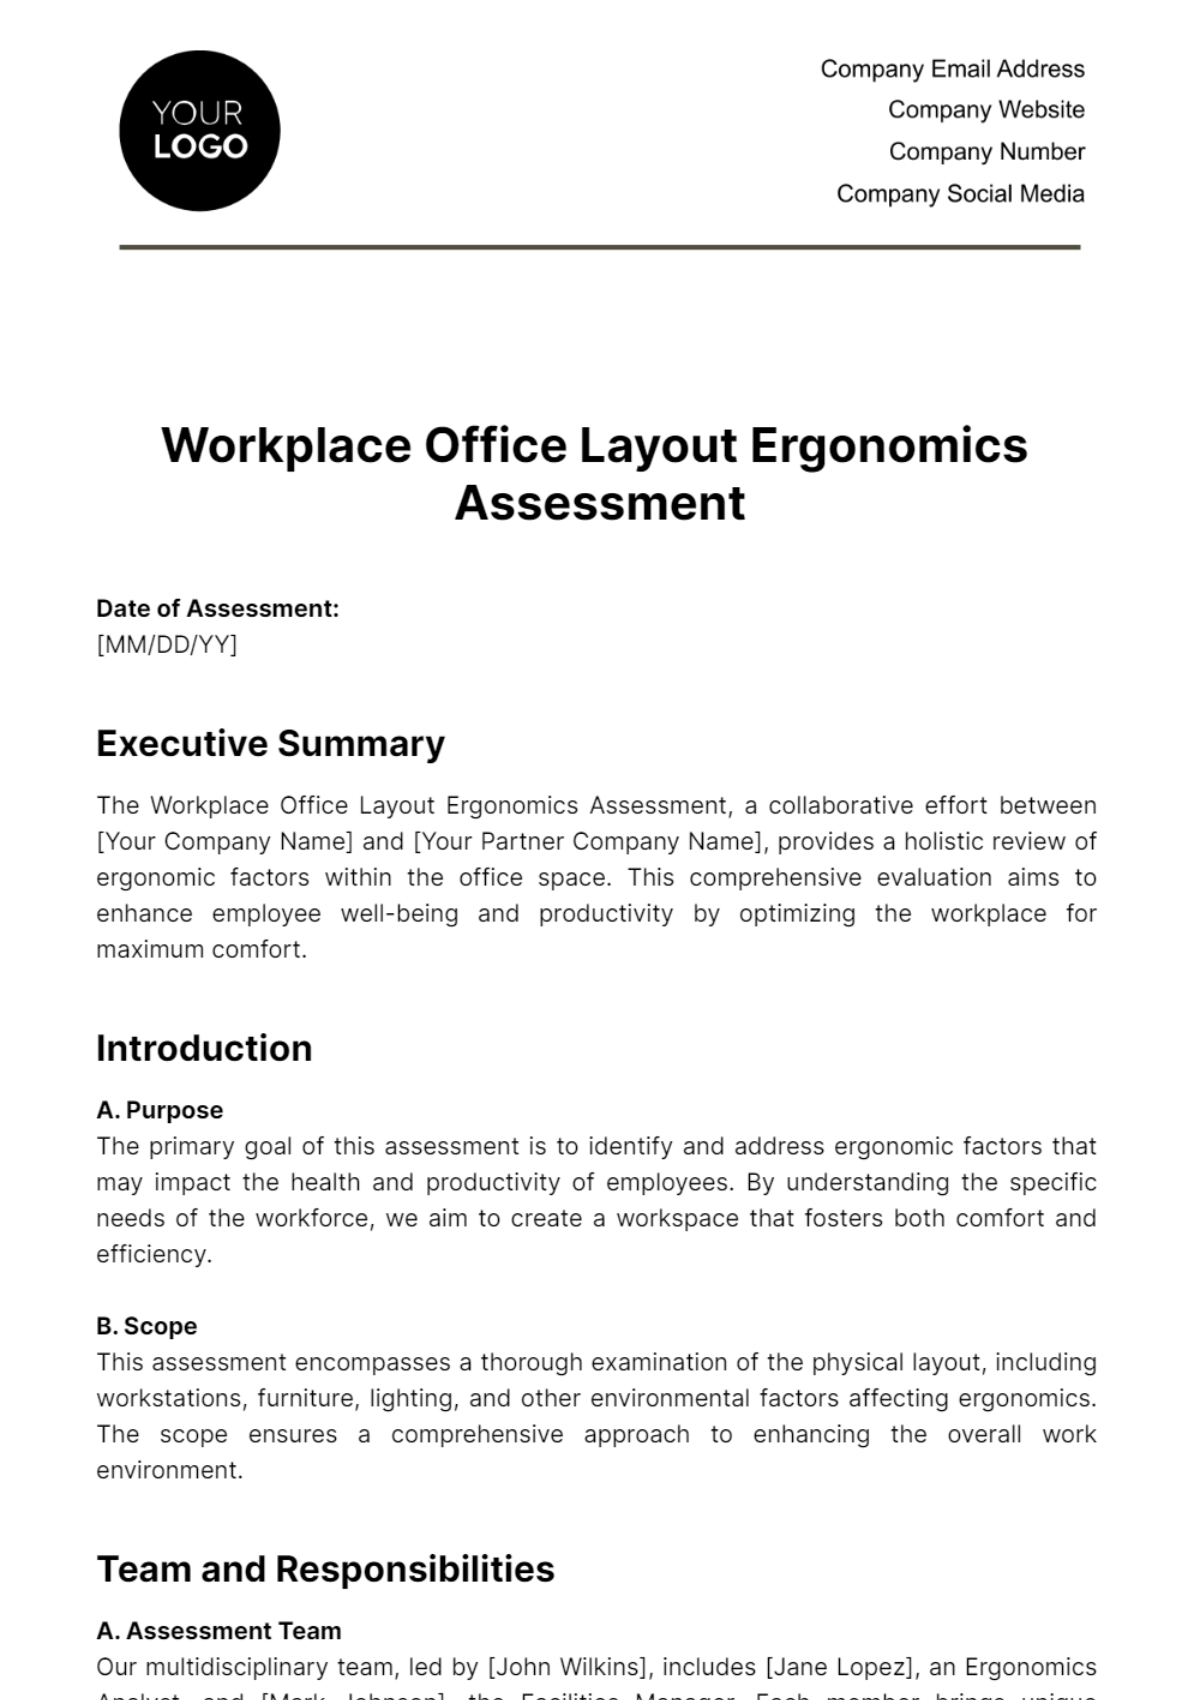 Free Workplace Office Layout Ergonomics Assessment Template